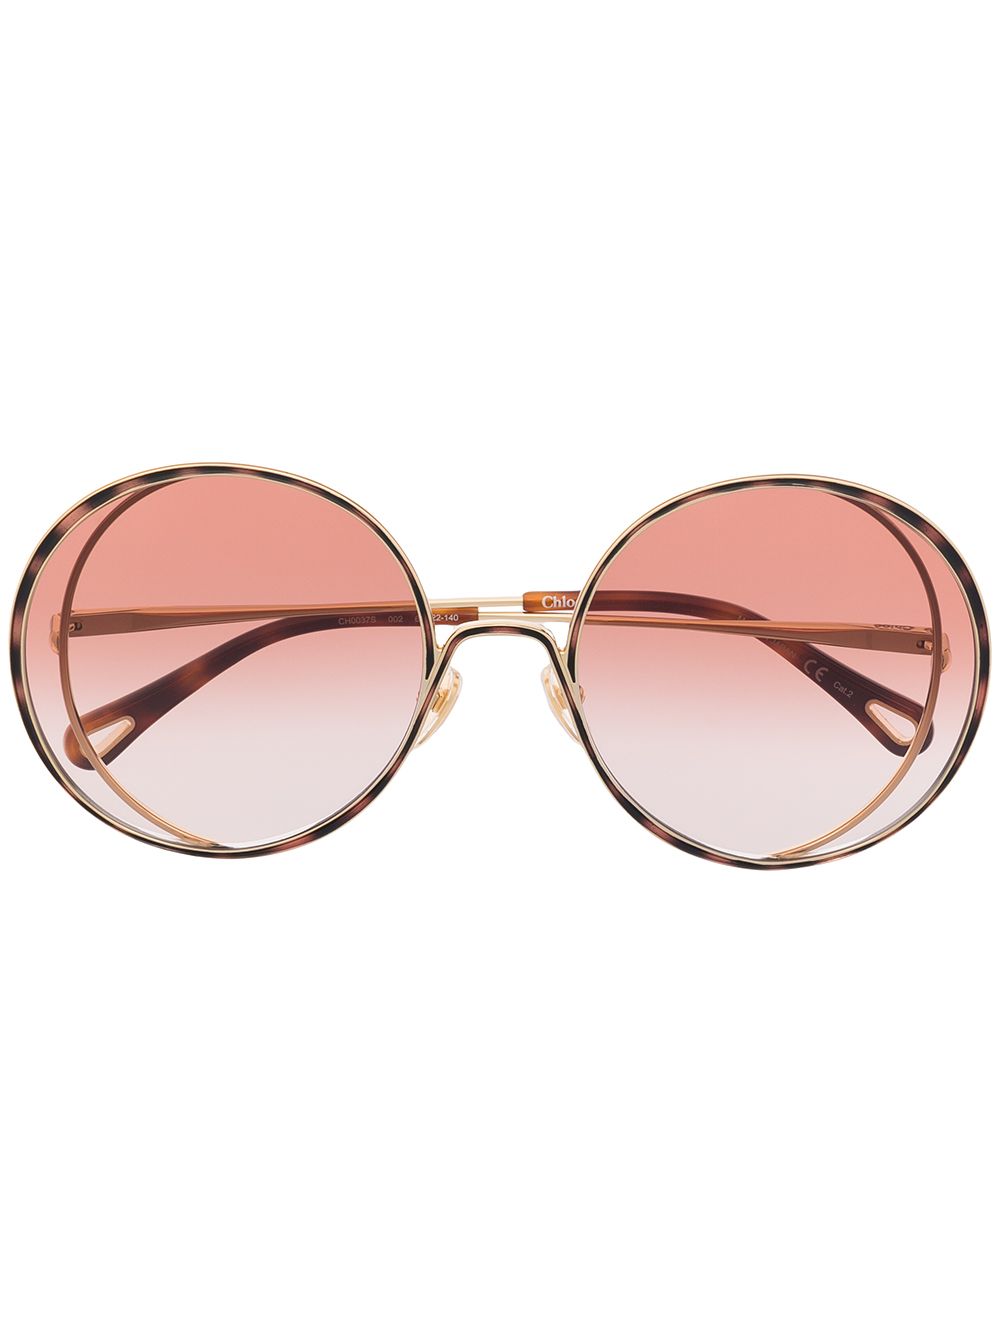 Chloé Eyewear Tayla round oversized sunglasses - Gold von Chloé Eyewear